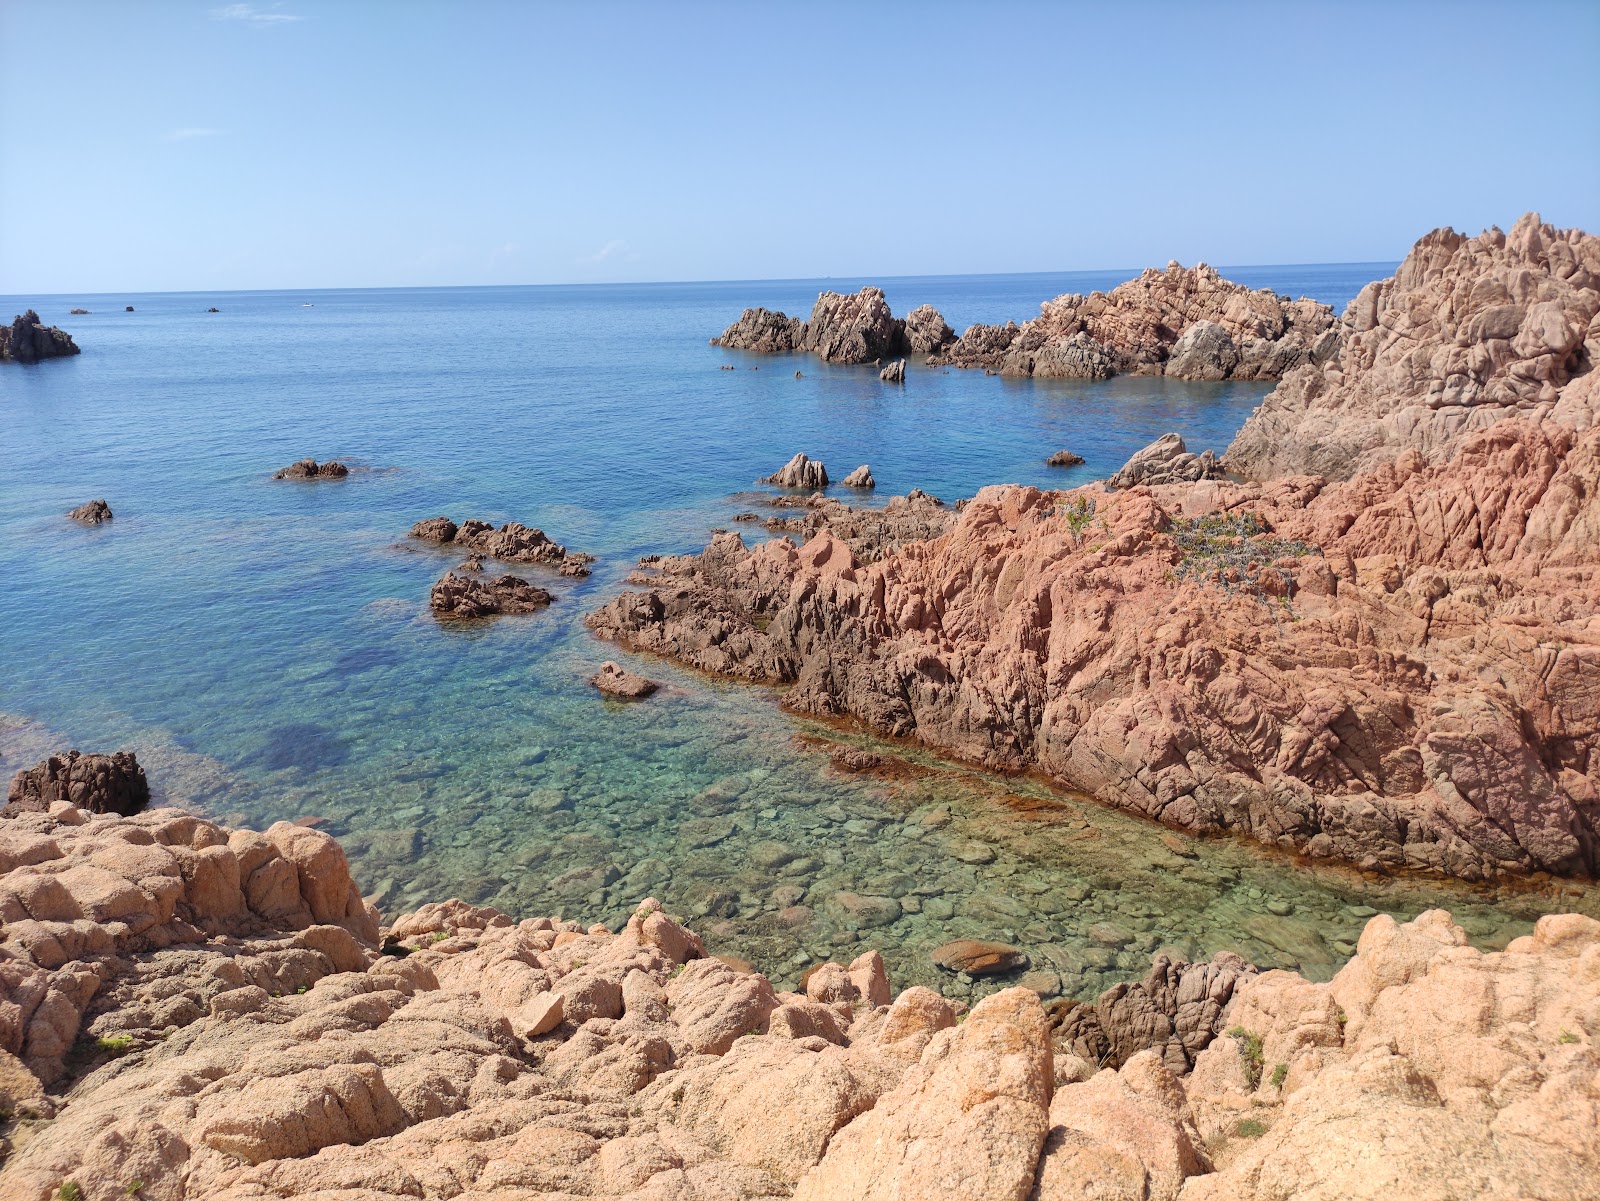 Fotografija Spiaggia de La Sorgente z kamni površino